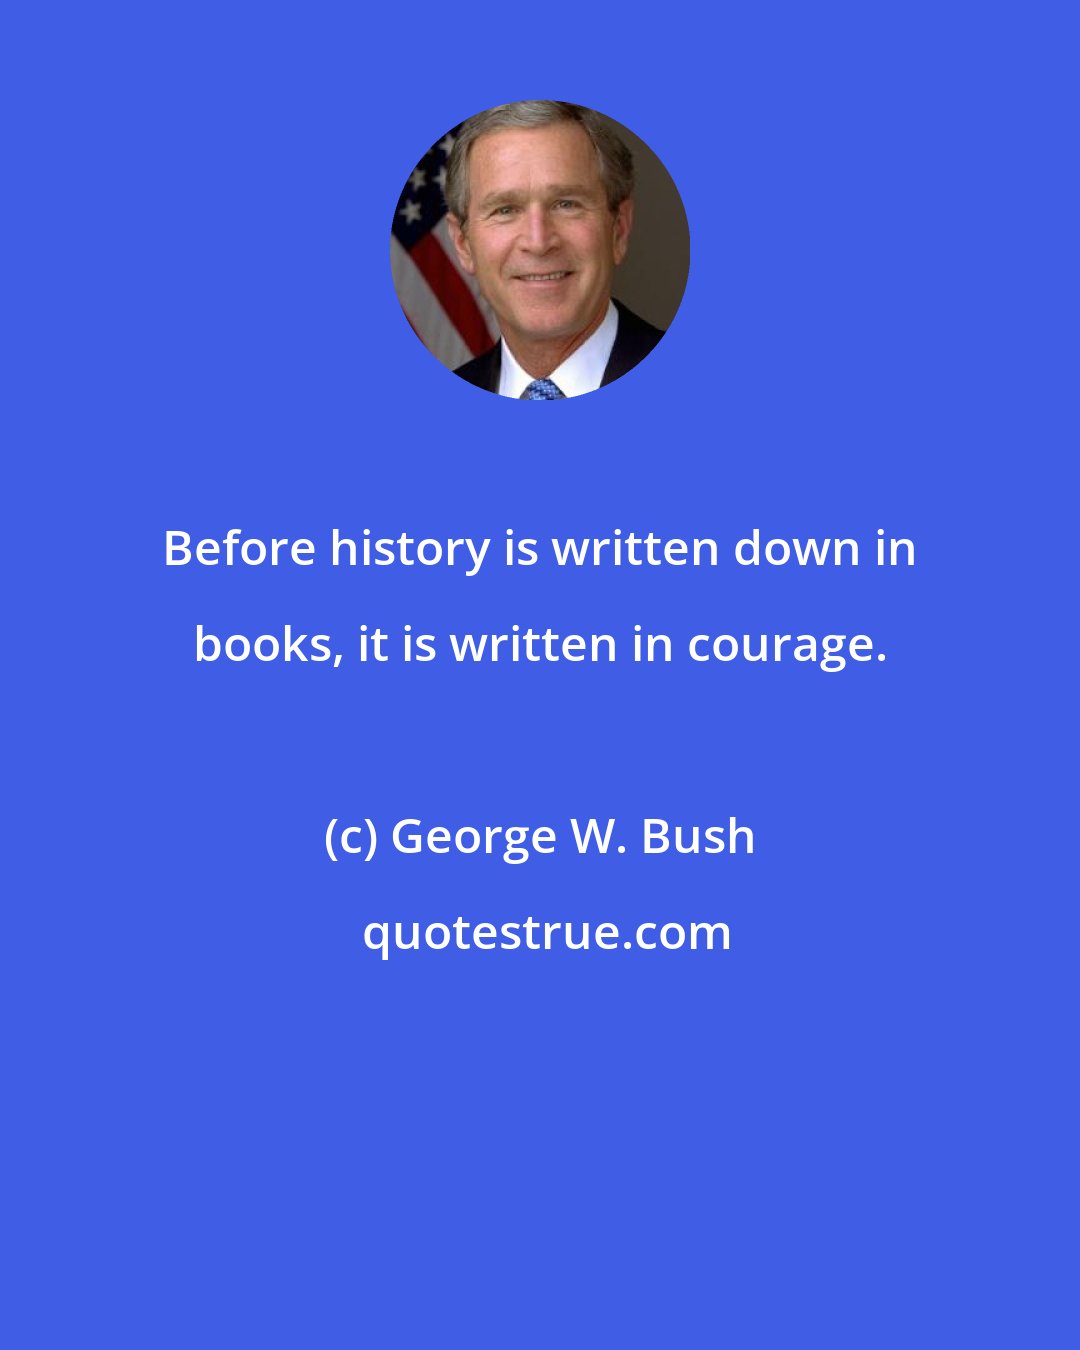 George W. Bush: Before history is written down in books, it is written in courage.